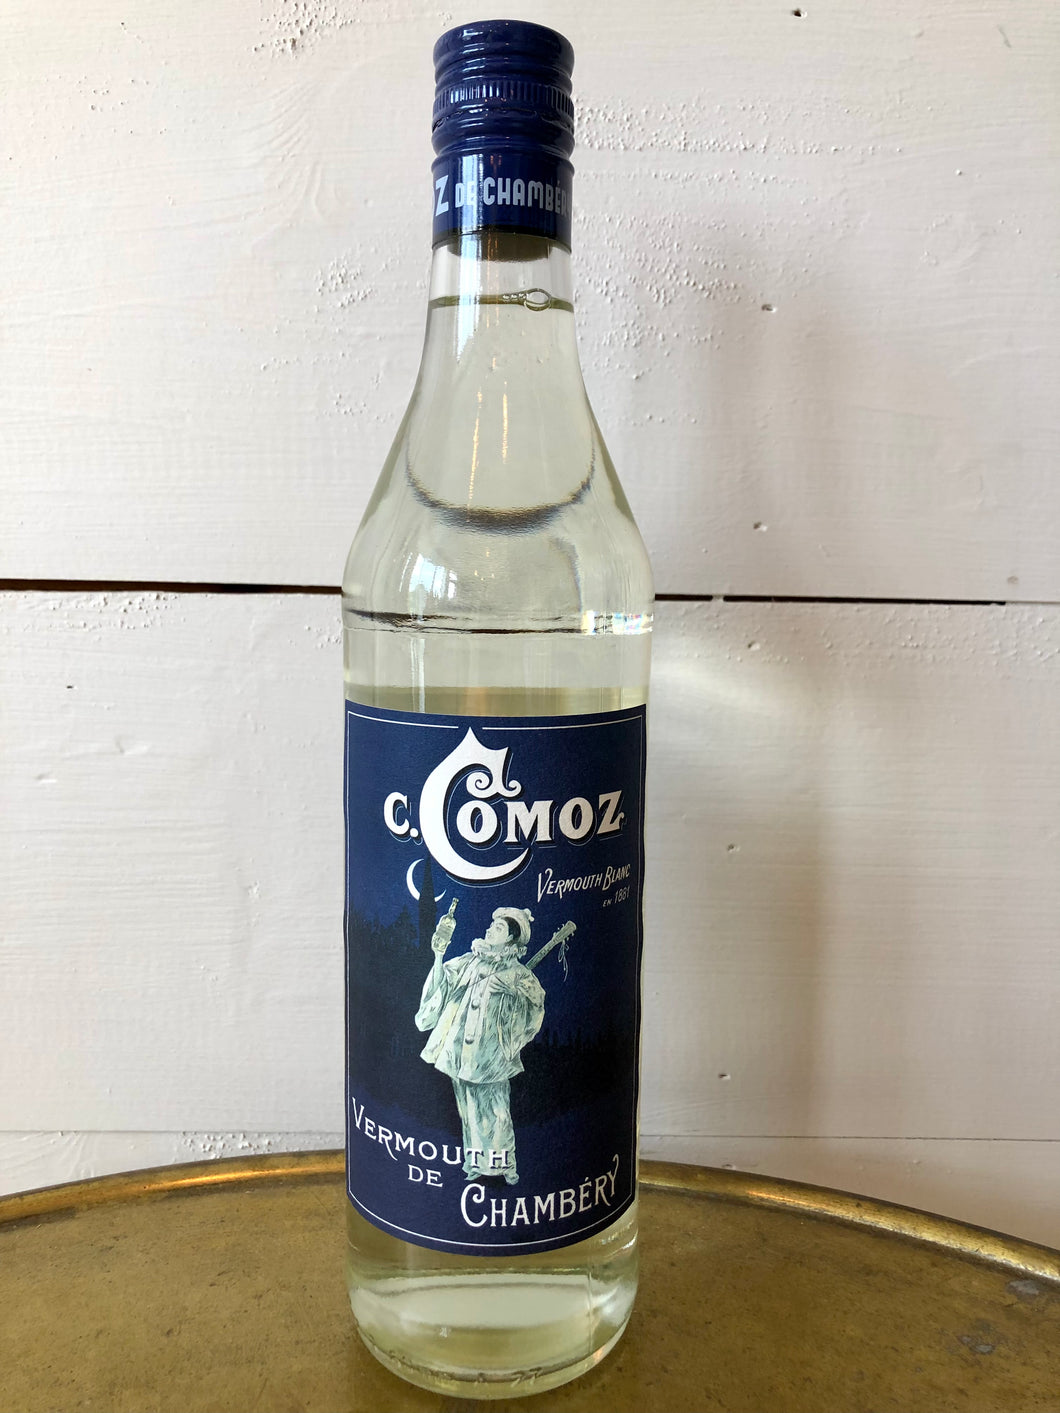 Comoz Vermouth De Chambery Blanc NV